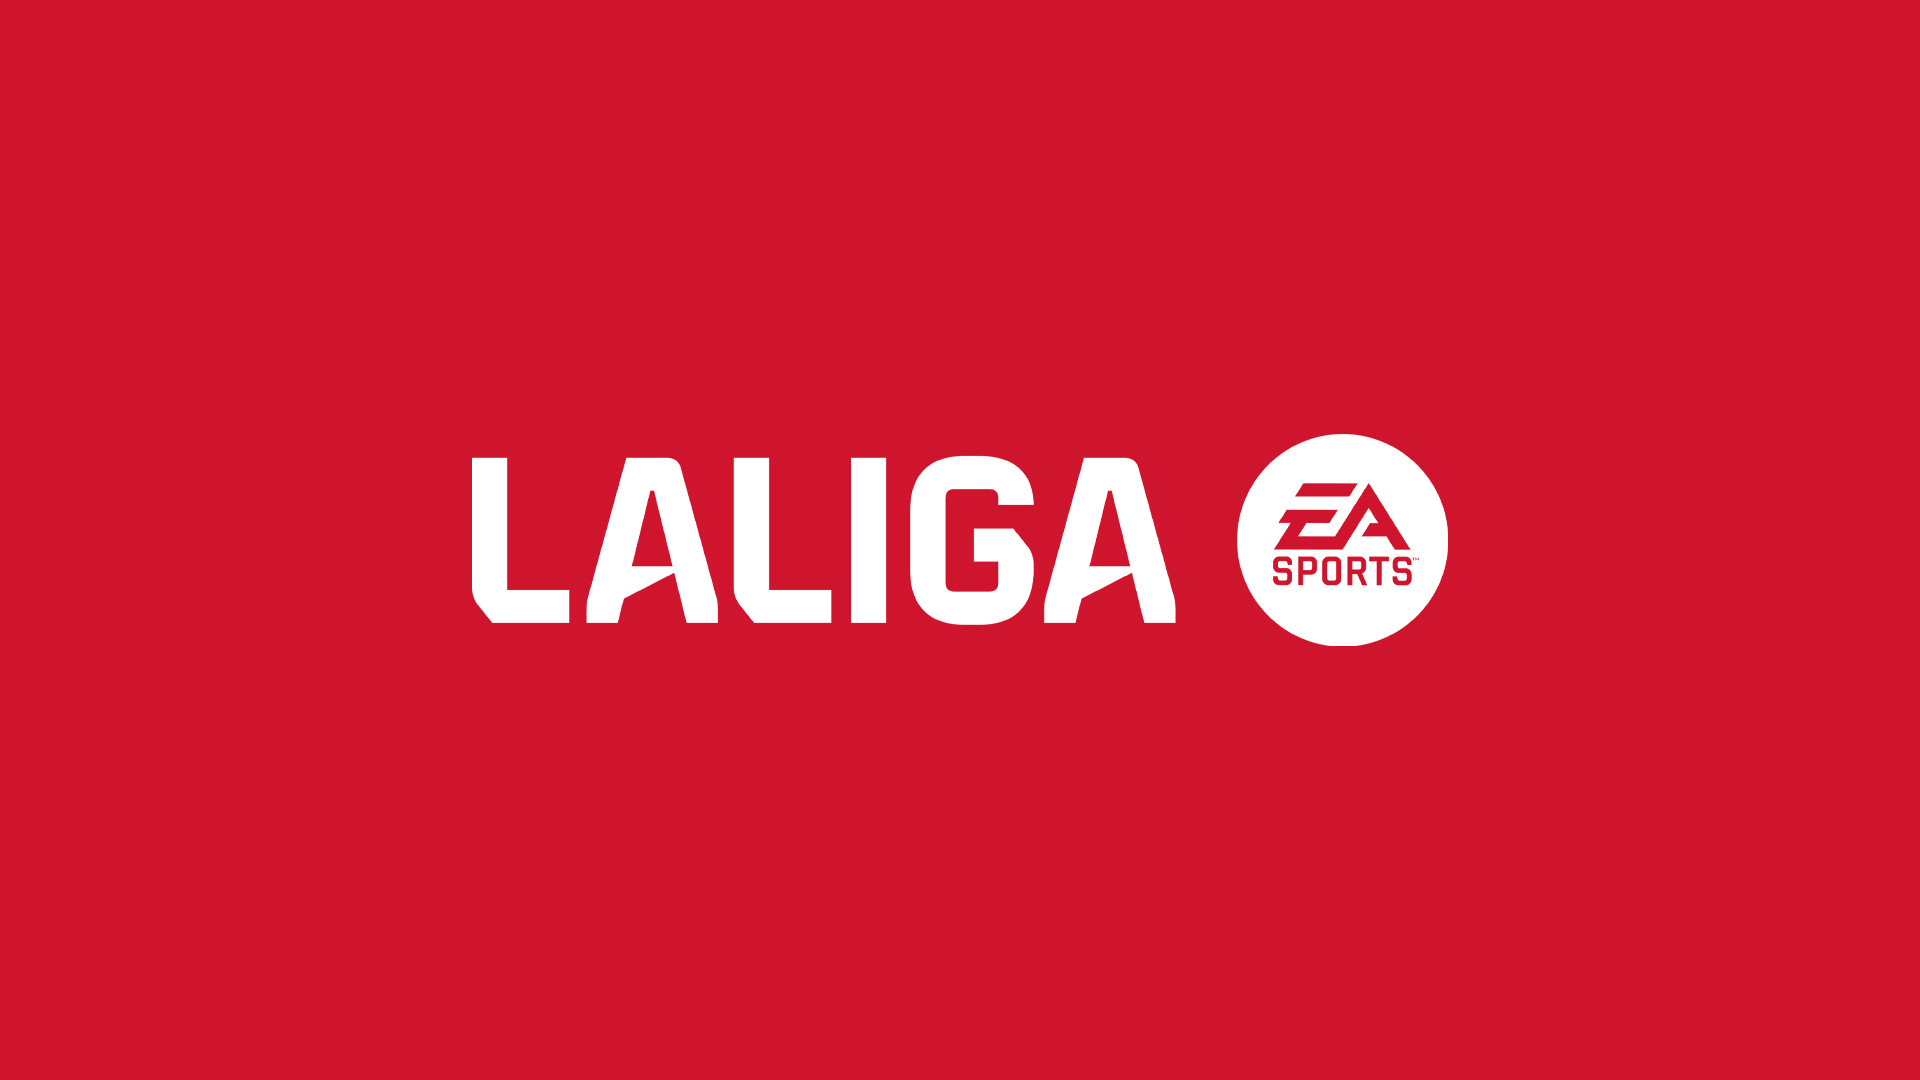 Laliga ea sports logo